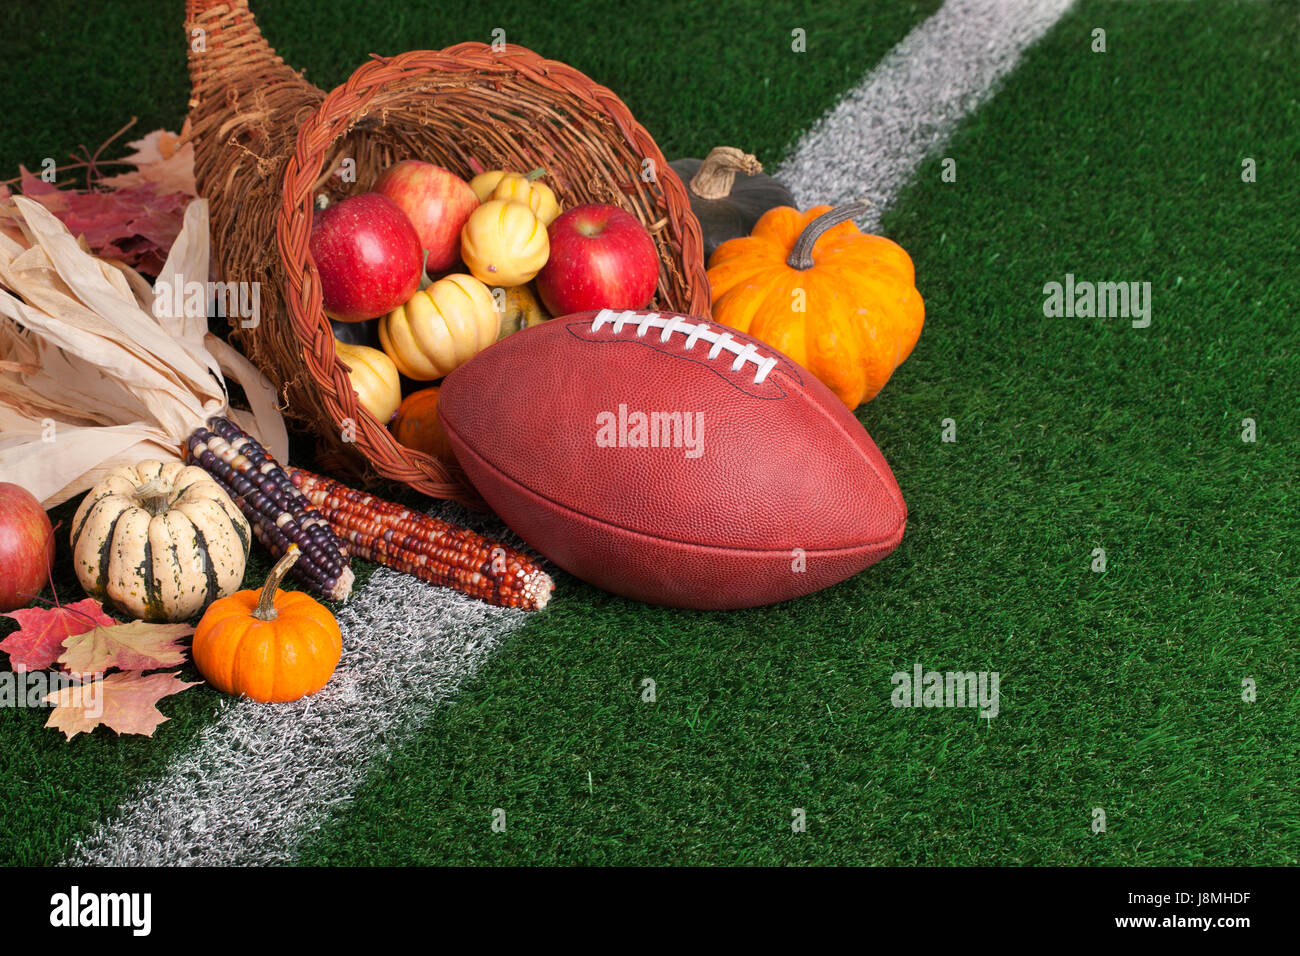 Football in a cornucopia with autumn harvest produce Stock Photo